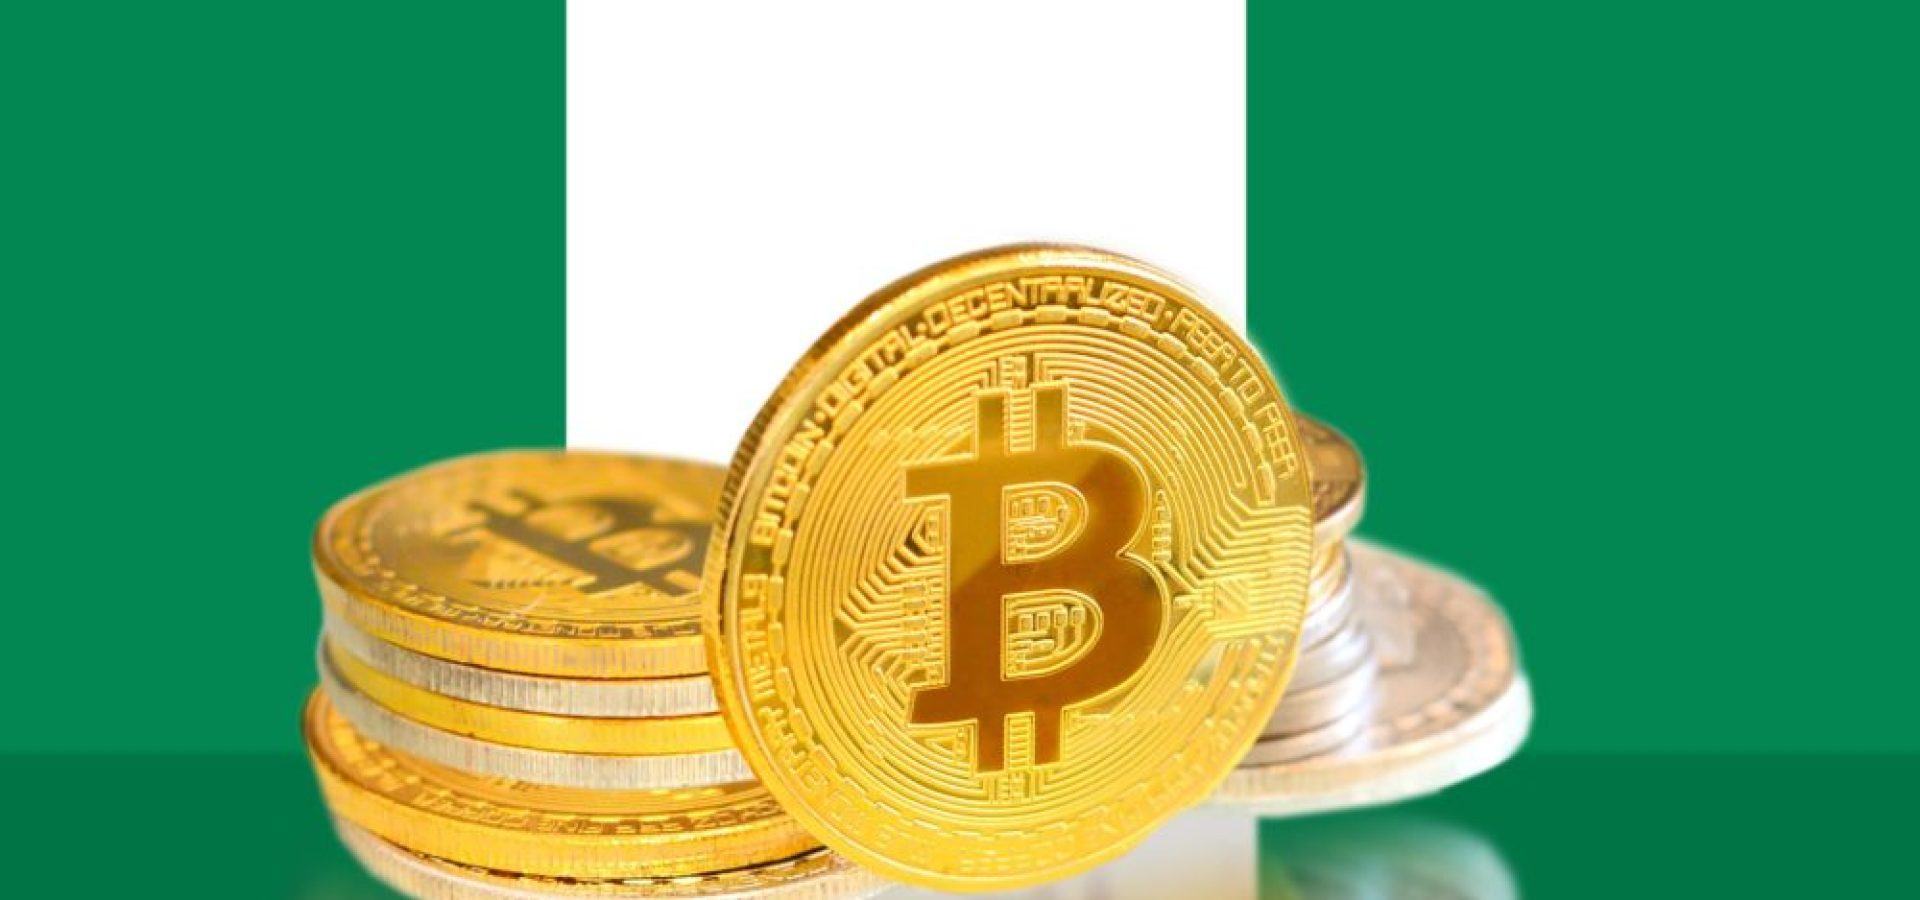 Nigeria and cryptocurrencies